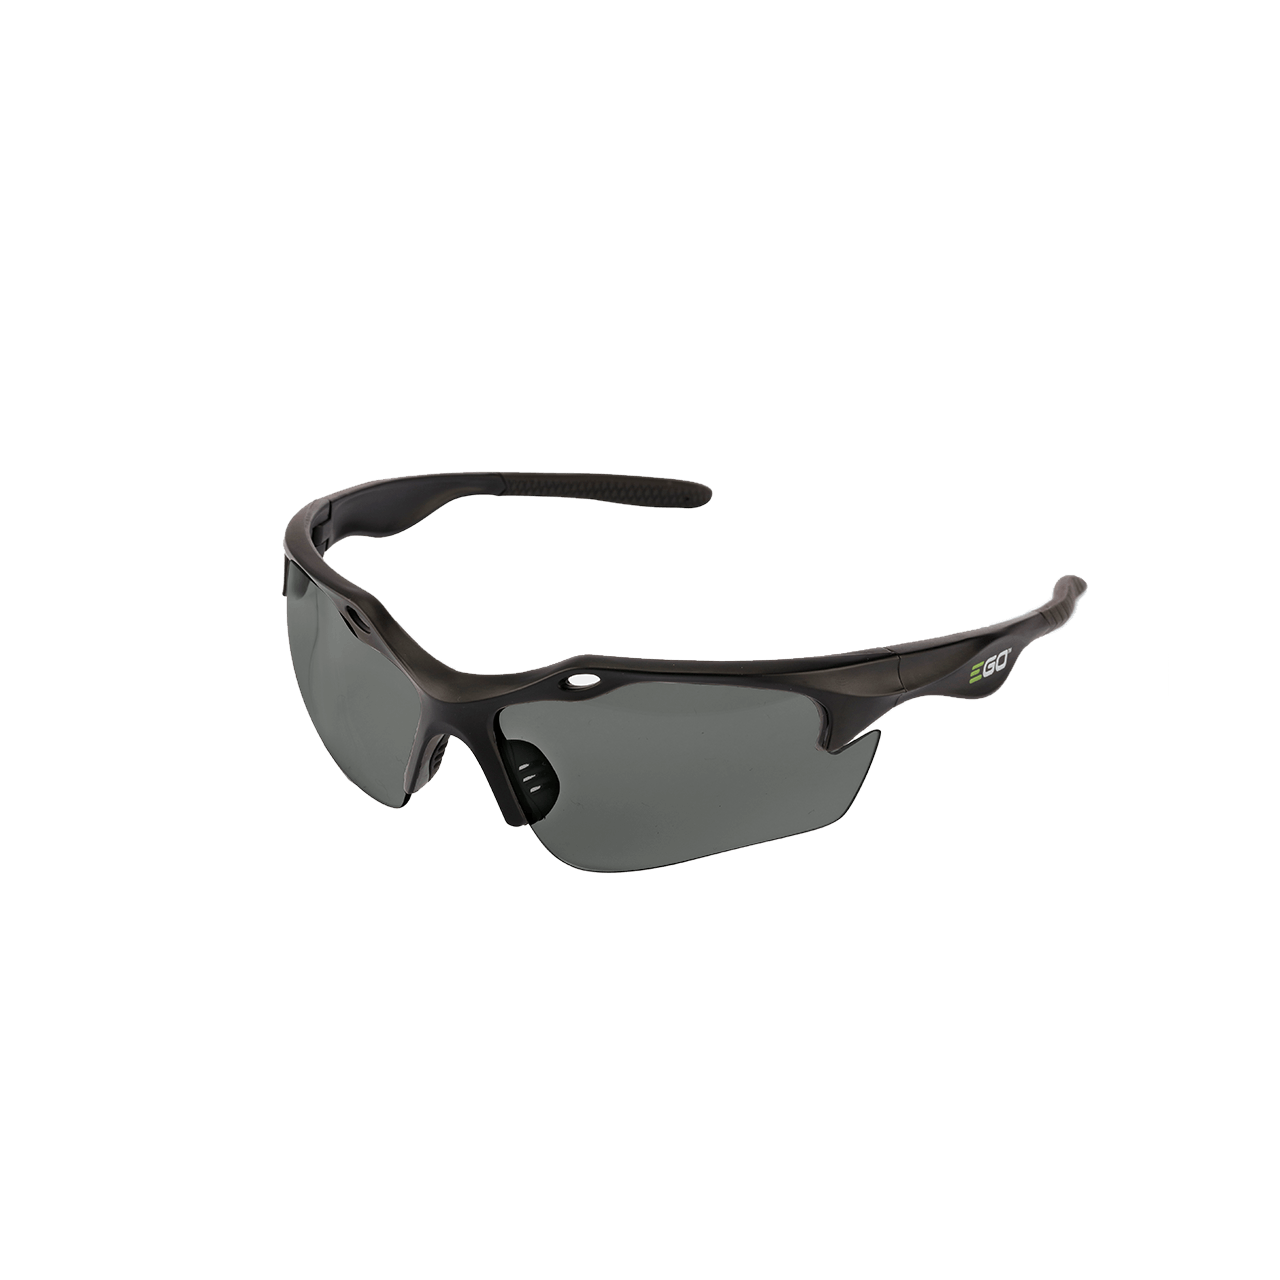 EGO POWER+ GS002 Essential Grey Safety Glasses.